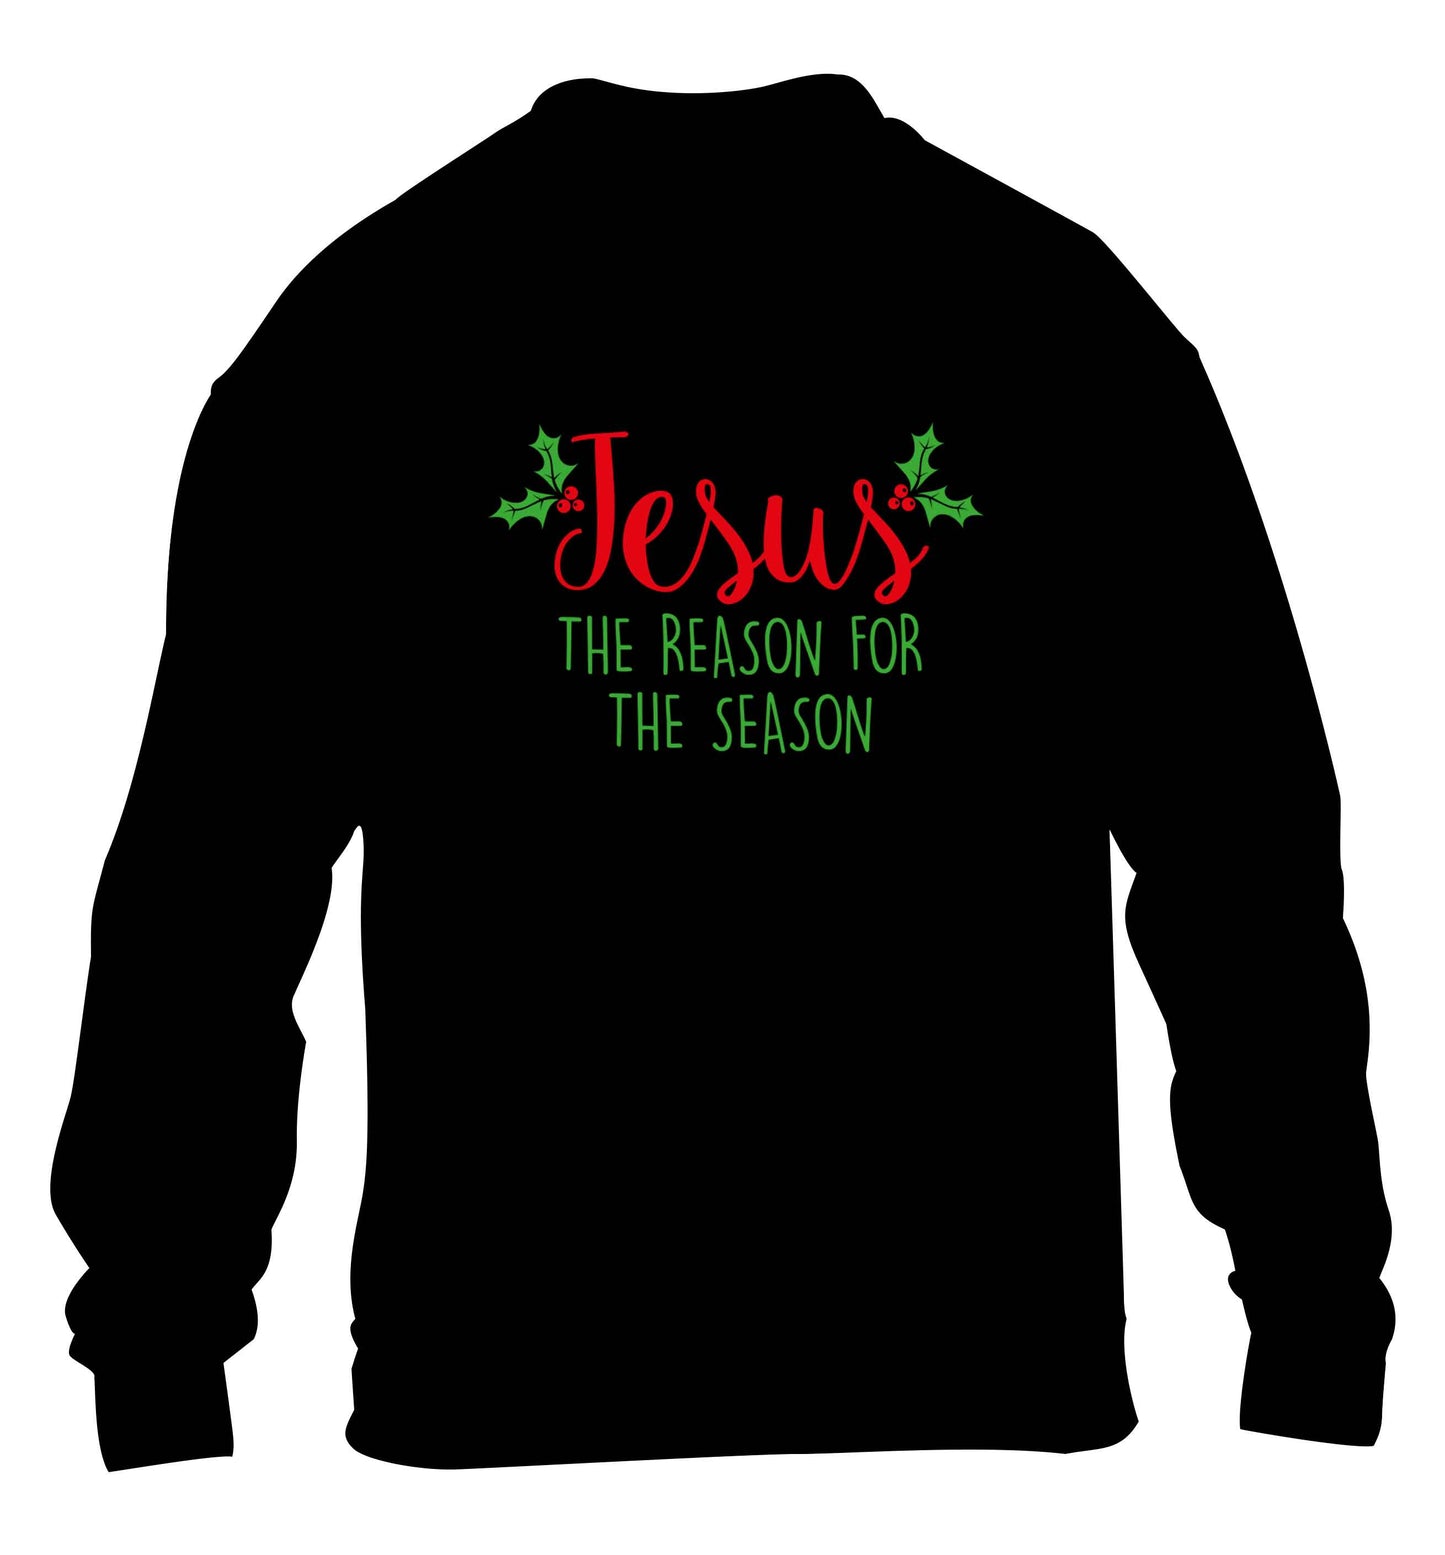 Jesus the reason for the season children's black sweater 12-13 Years